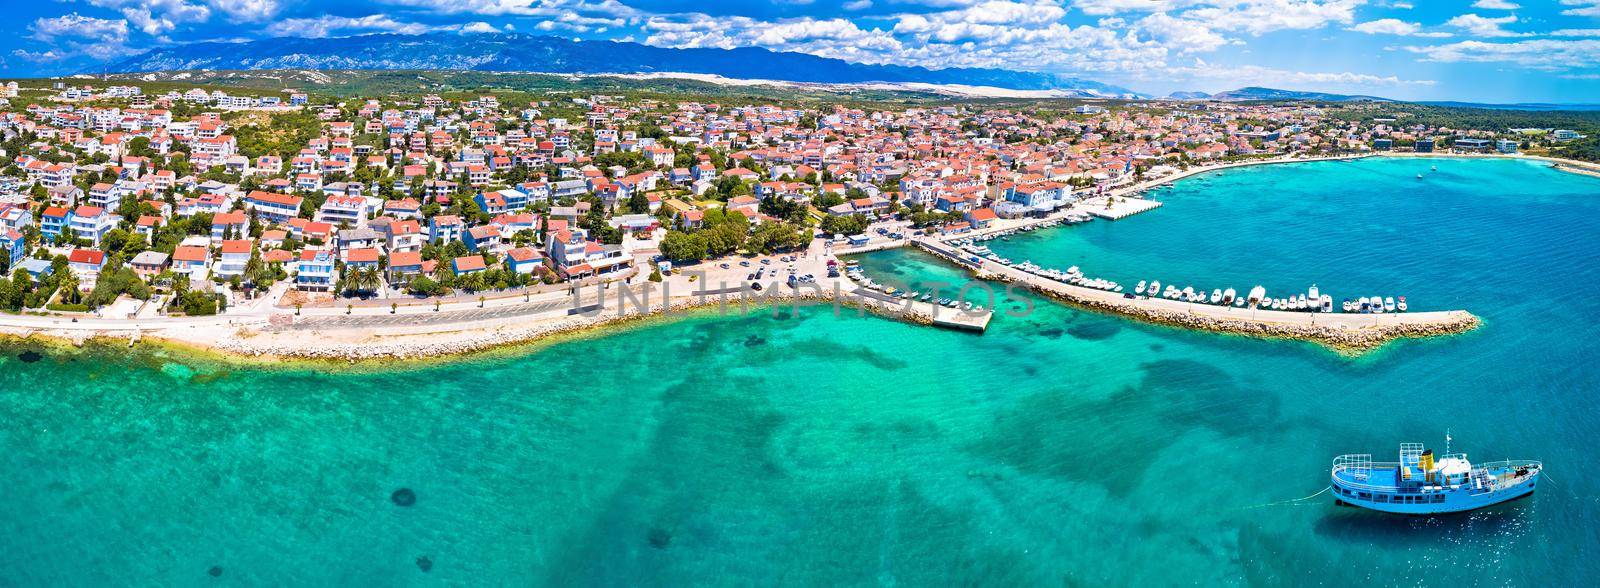 Town of Novalja beach and waterfront on Pag island aerial panoramic view, Dalmatia region of Croatia